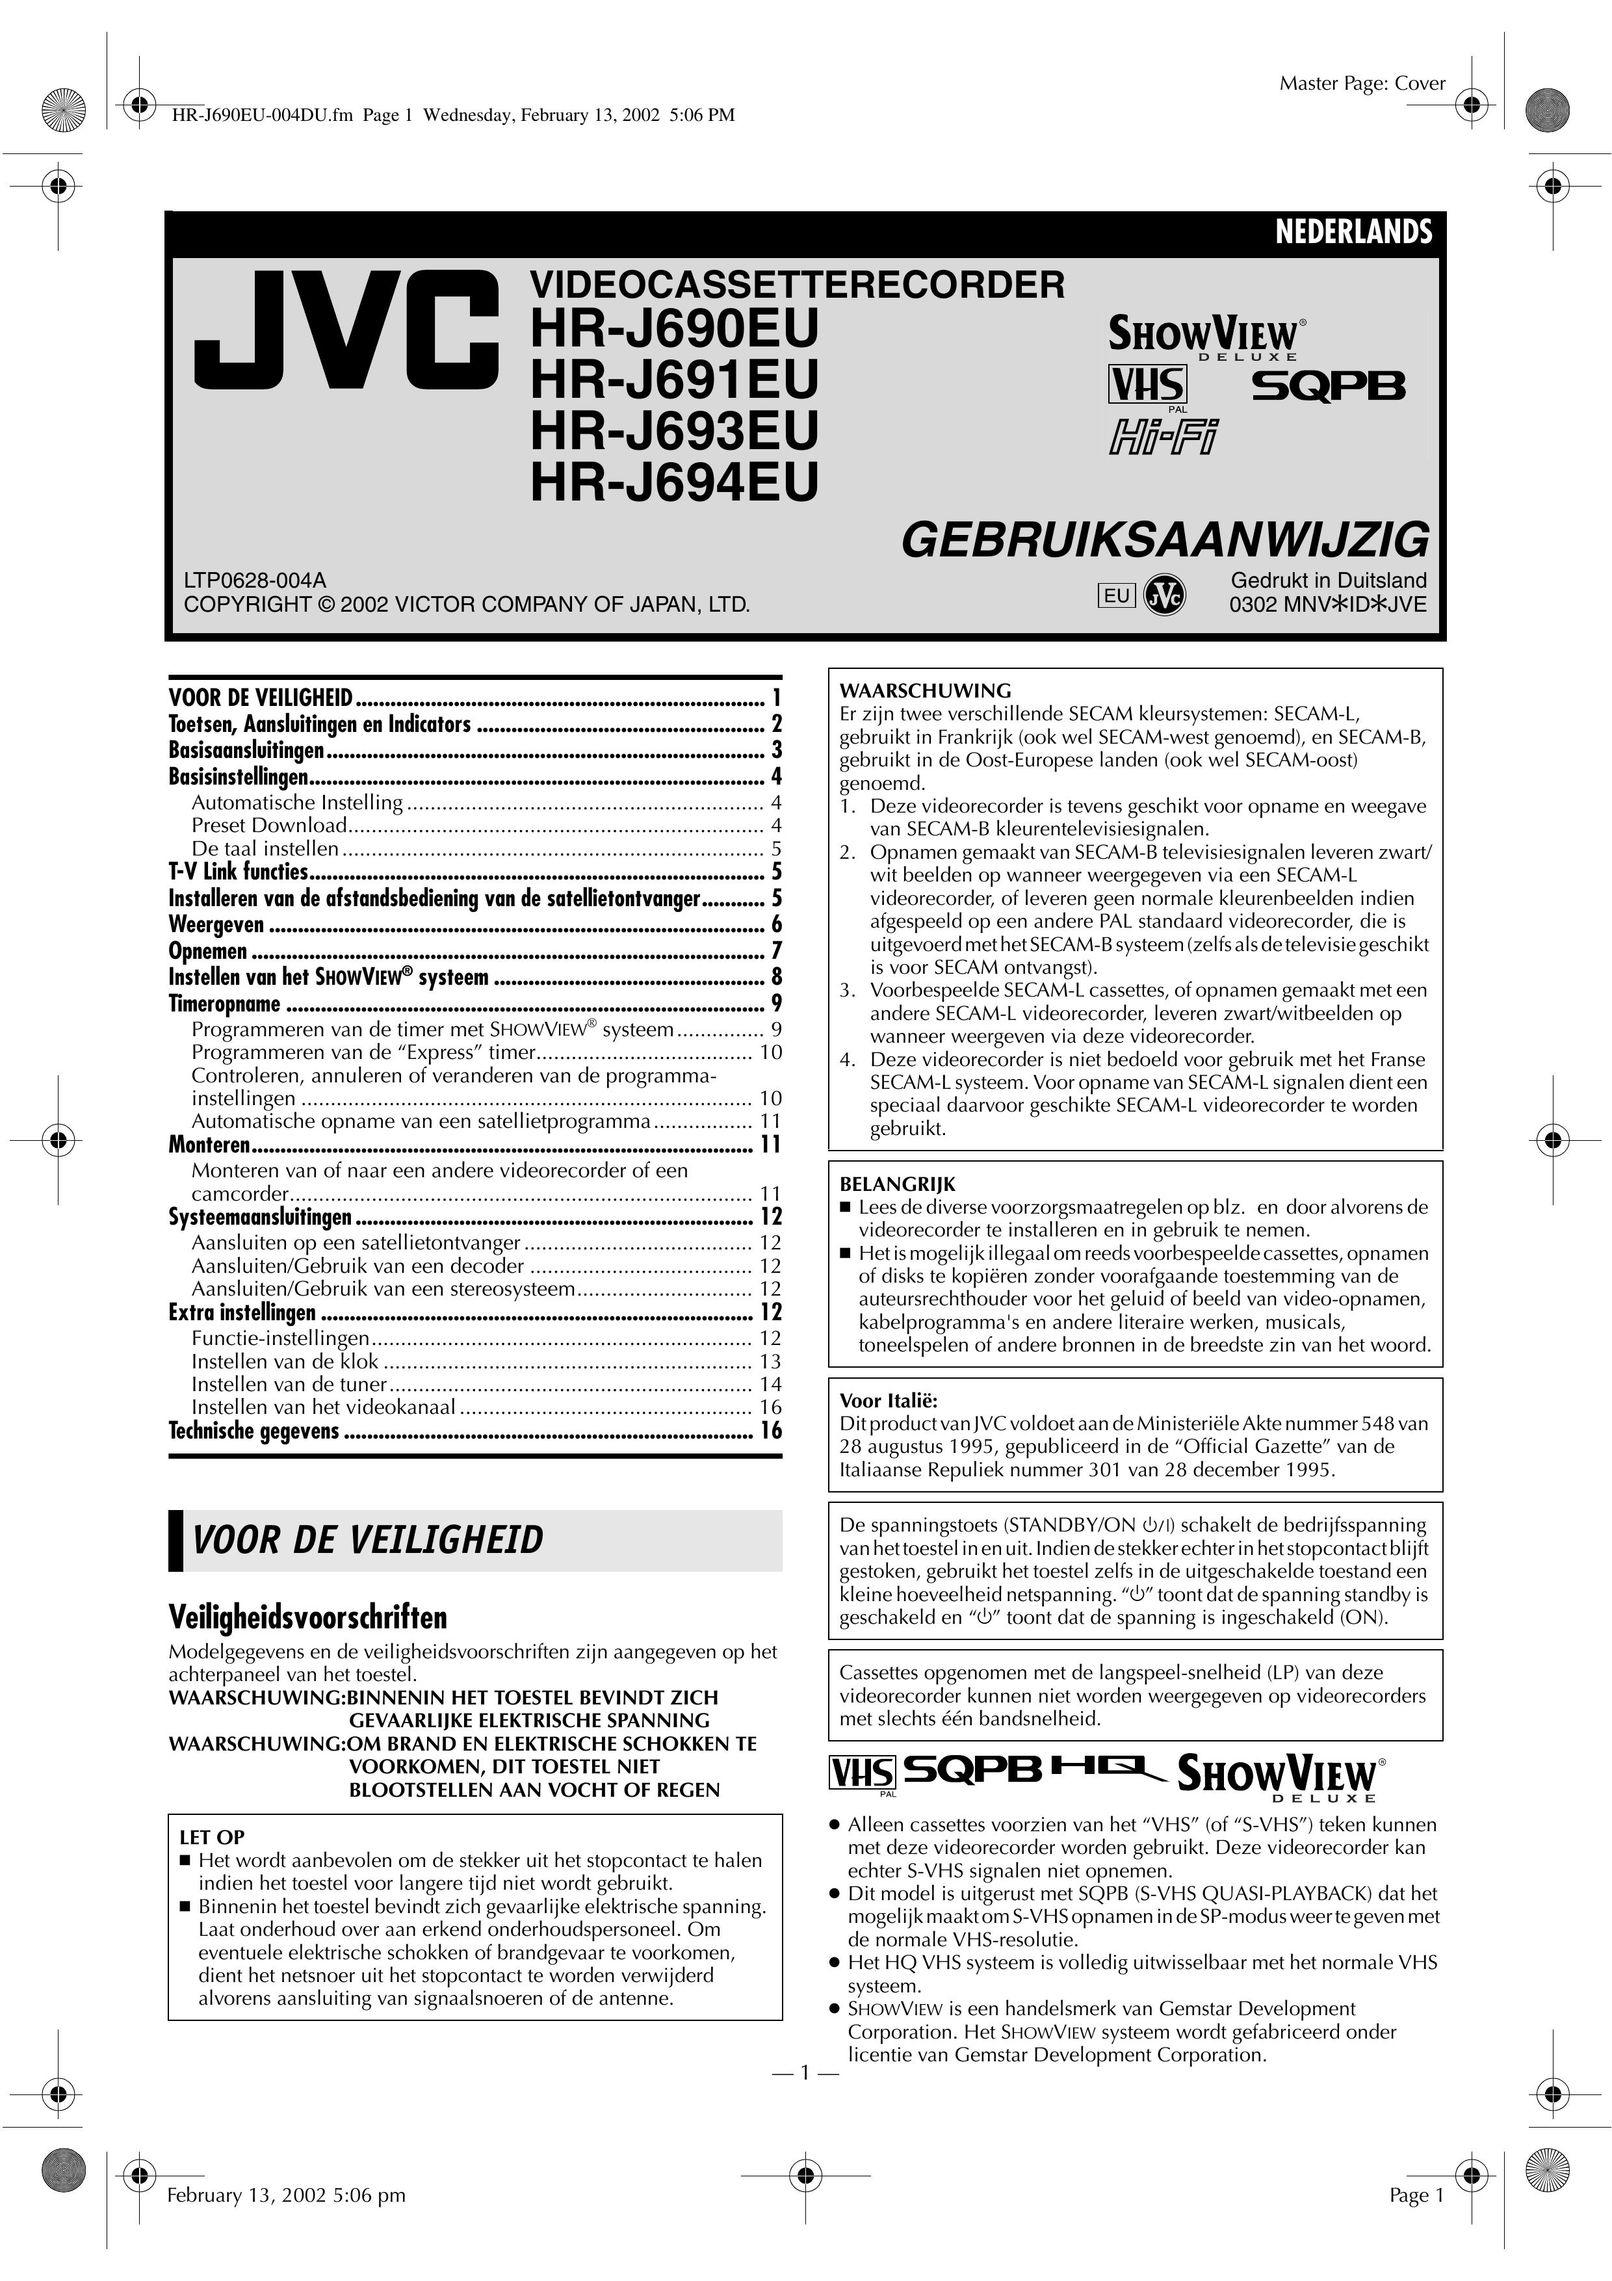 Victor HR-J690EU VCR User Manual